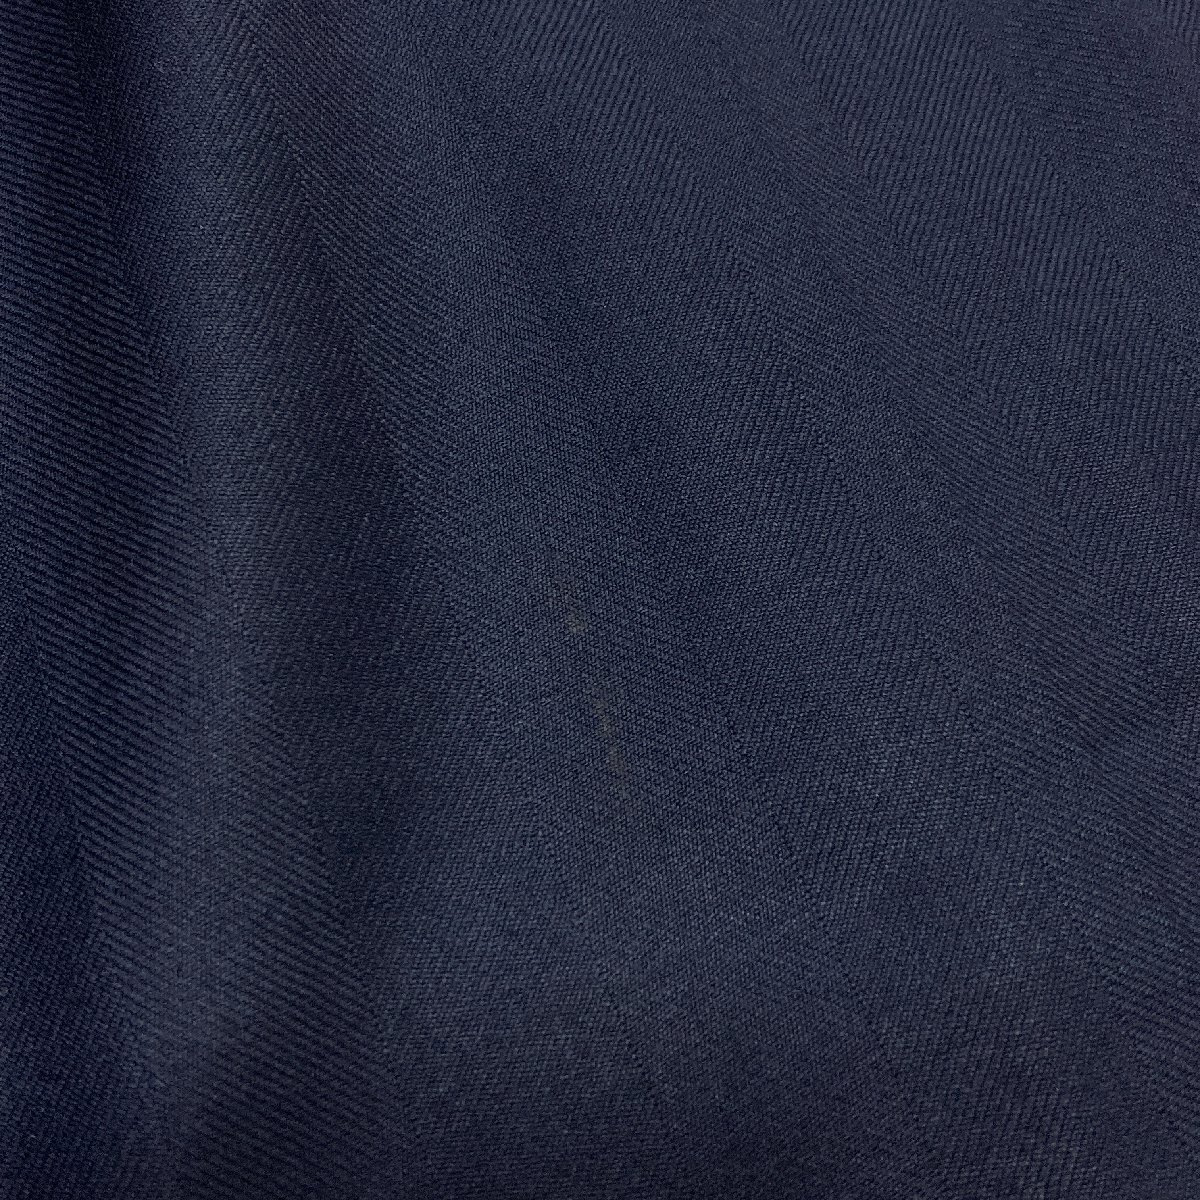 ●VERSACE ヴェルサーチ パンツ スラックス スーツパンツ 裾上げ ダブル 無地 ビジネス ネイビー系 紺色系 サイズ56R メンズ 0.44kg●_画像6